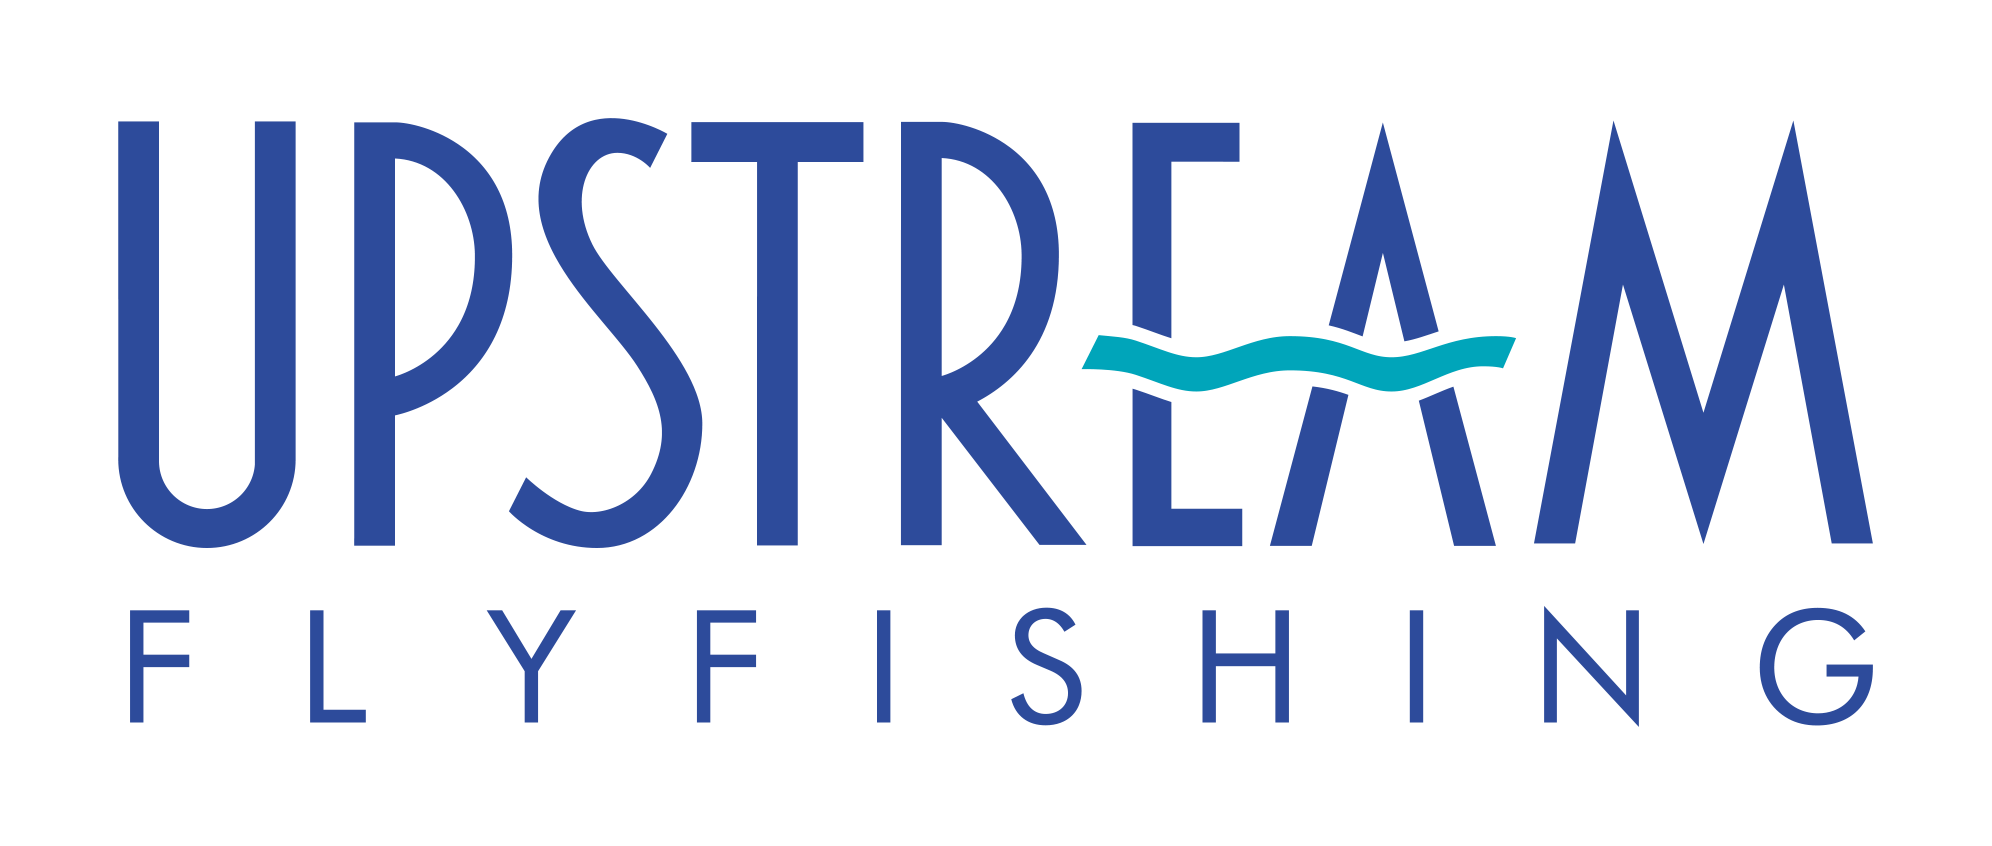 Upstream Flyfishing